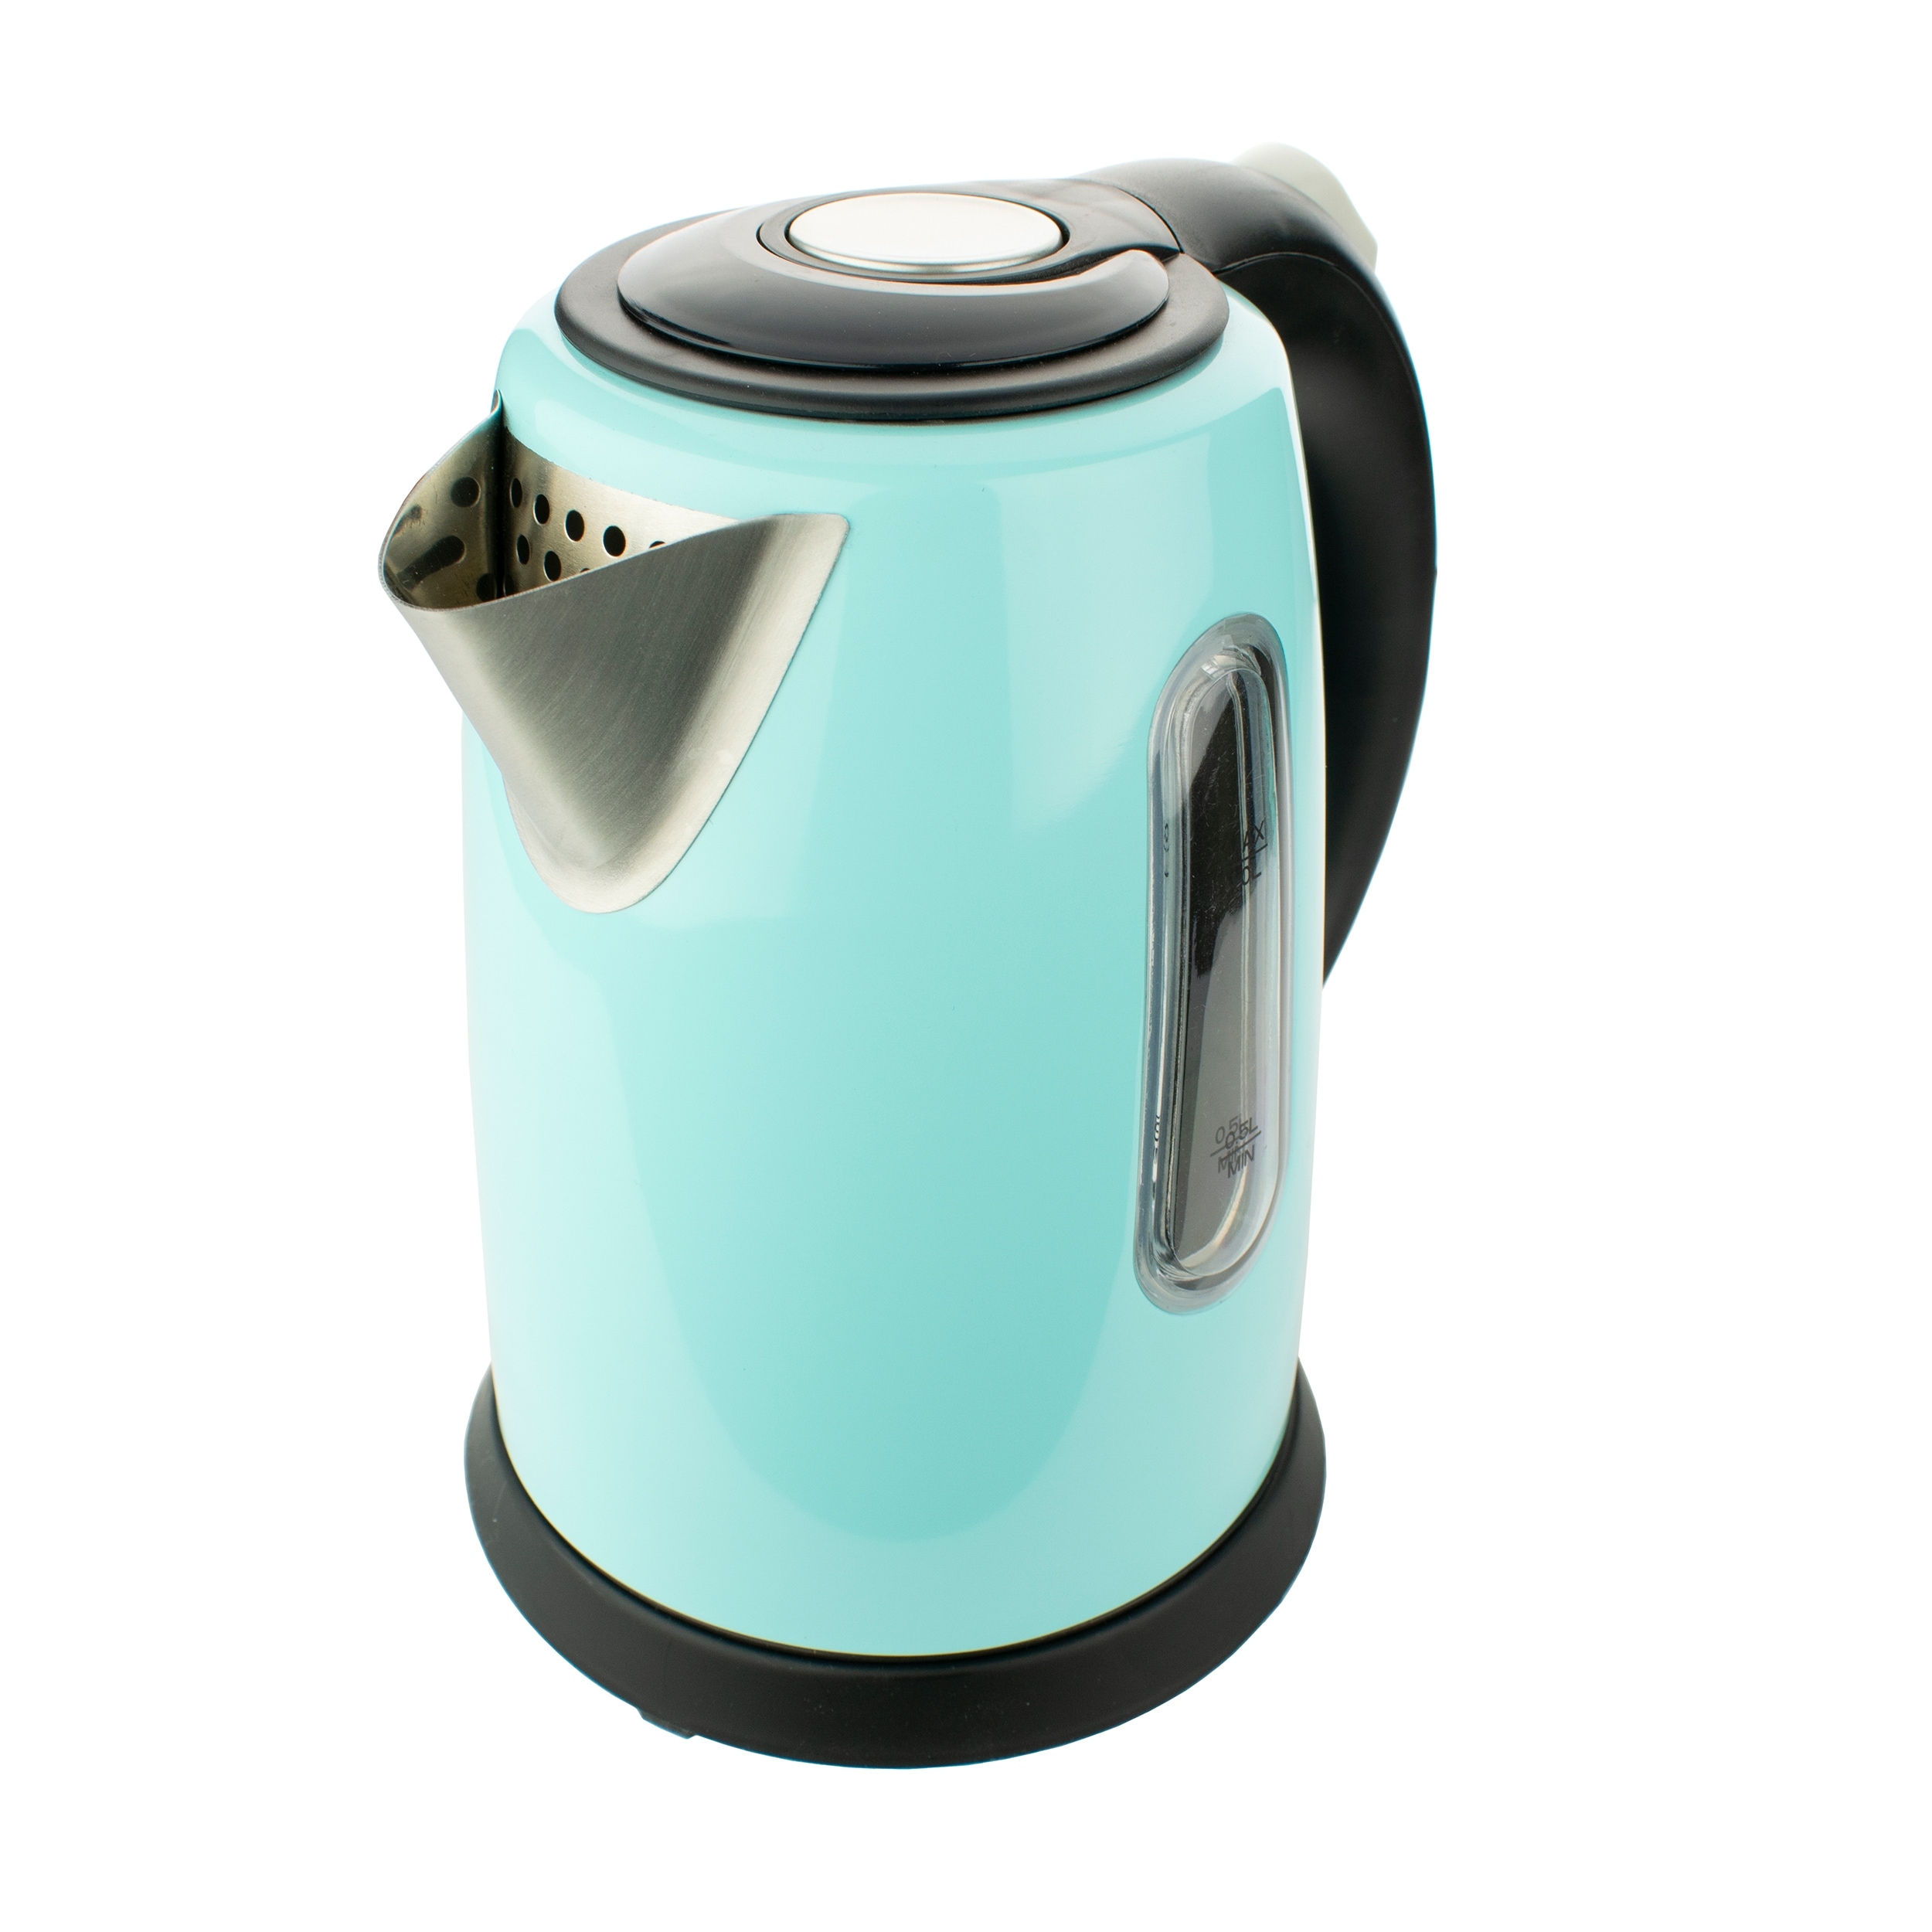 Decen Electric Tea Kettle 1.7L with Removable Tea Infuser